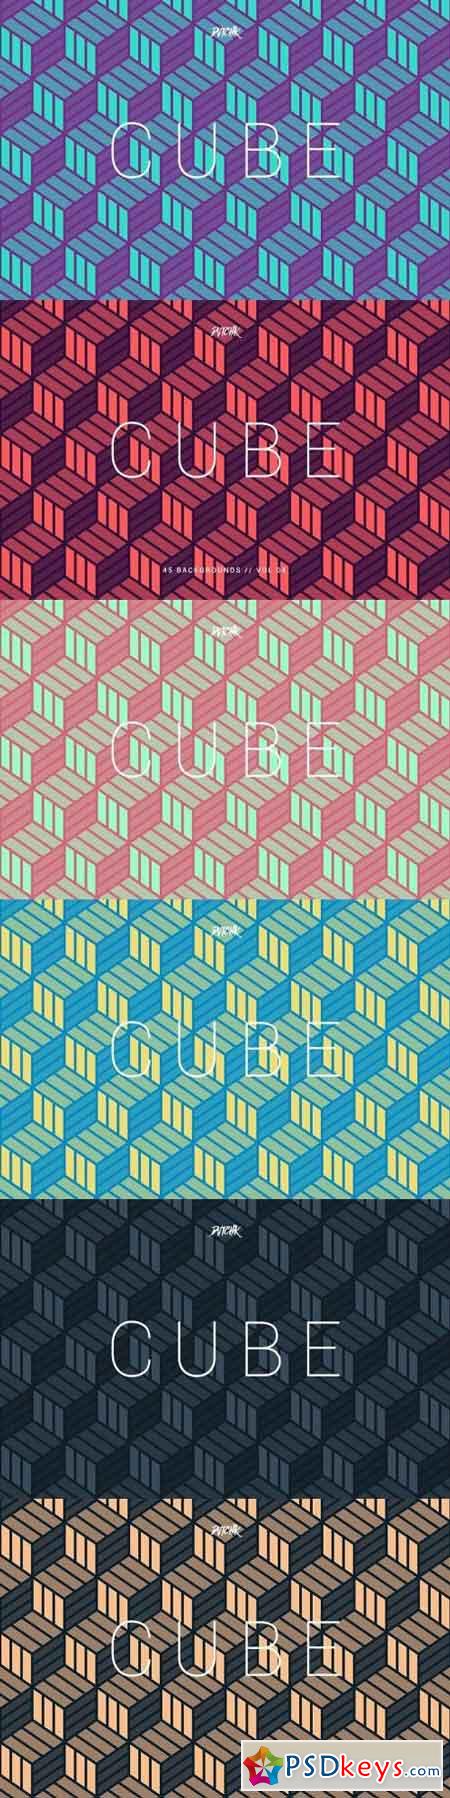 Cube Seamless Geometric Backgrounds Vol. 04